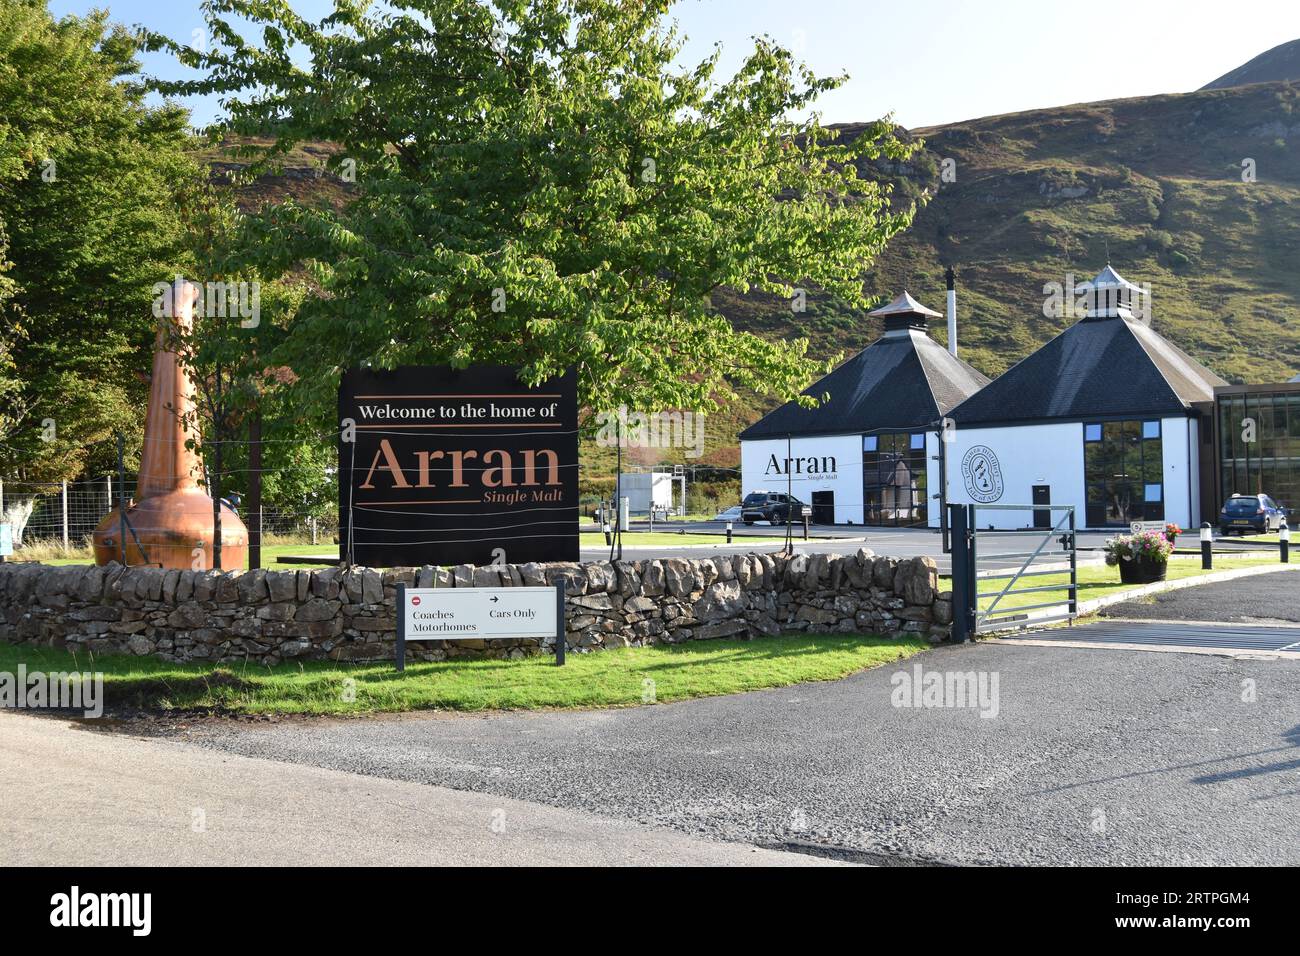 The Lochranza Distillery, home of Arran Single Malt, on the Isle of Arran, Scotland. Stock Photo